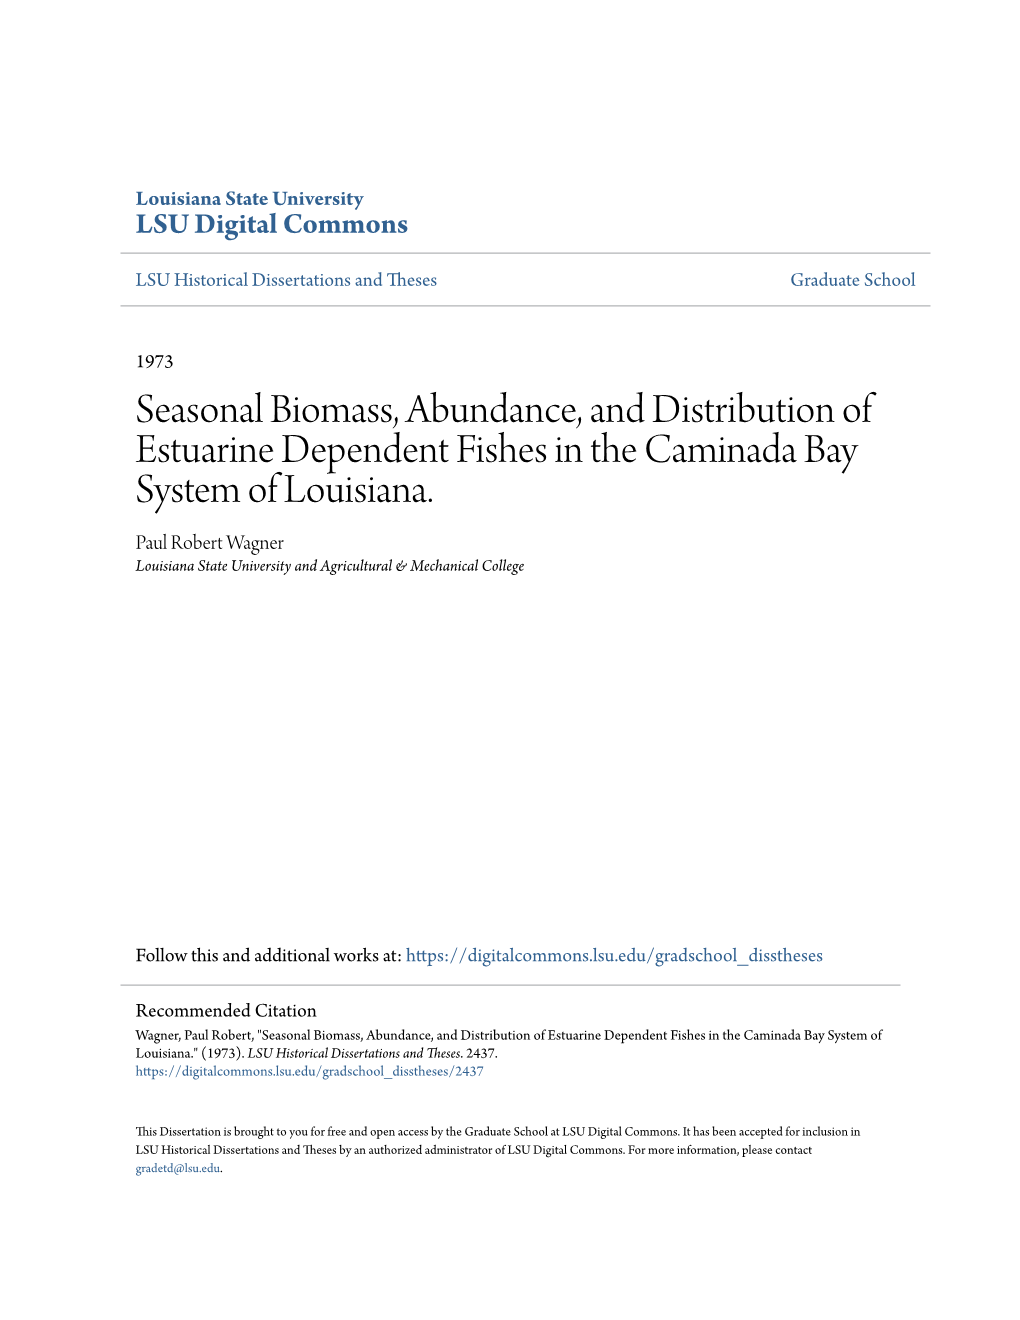 Seasonal Biomass, Abundance, and Distribution of Estuarine Dependent Fishes in the Caminada Bay System of Louisiana